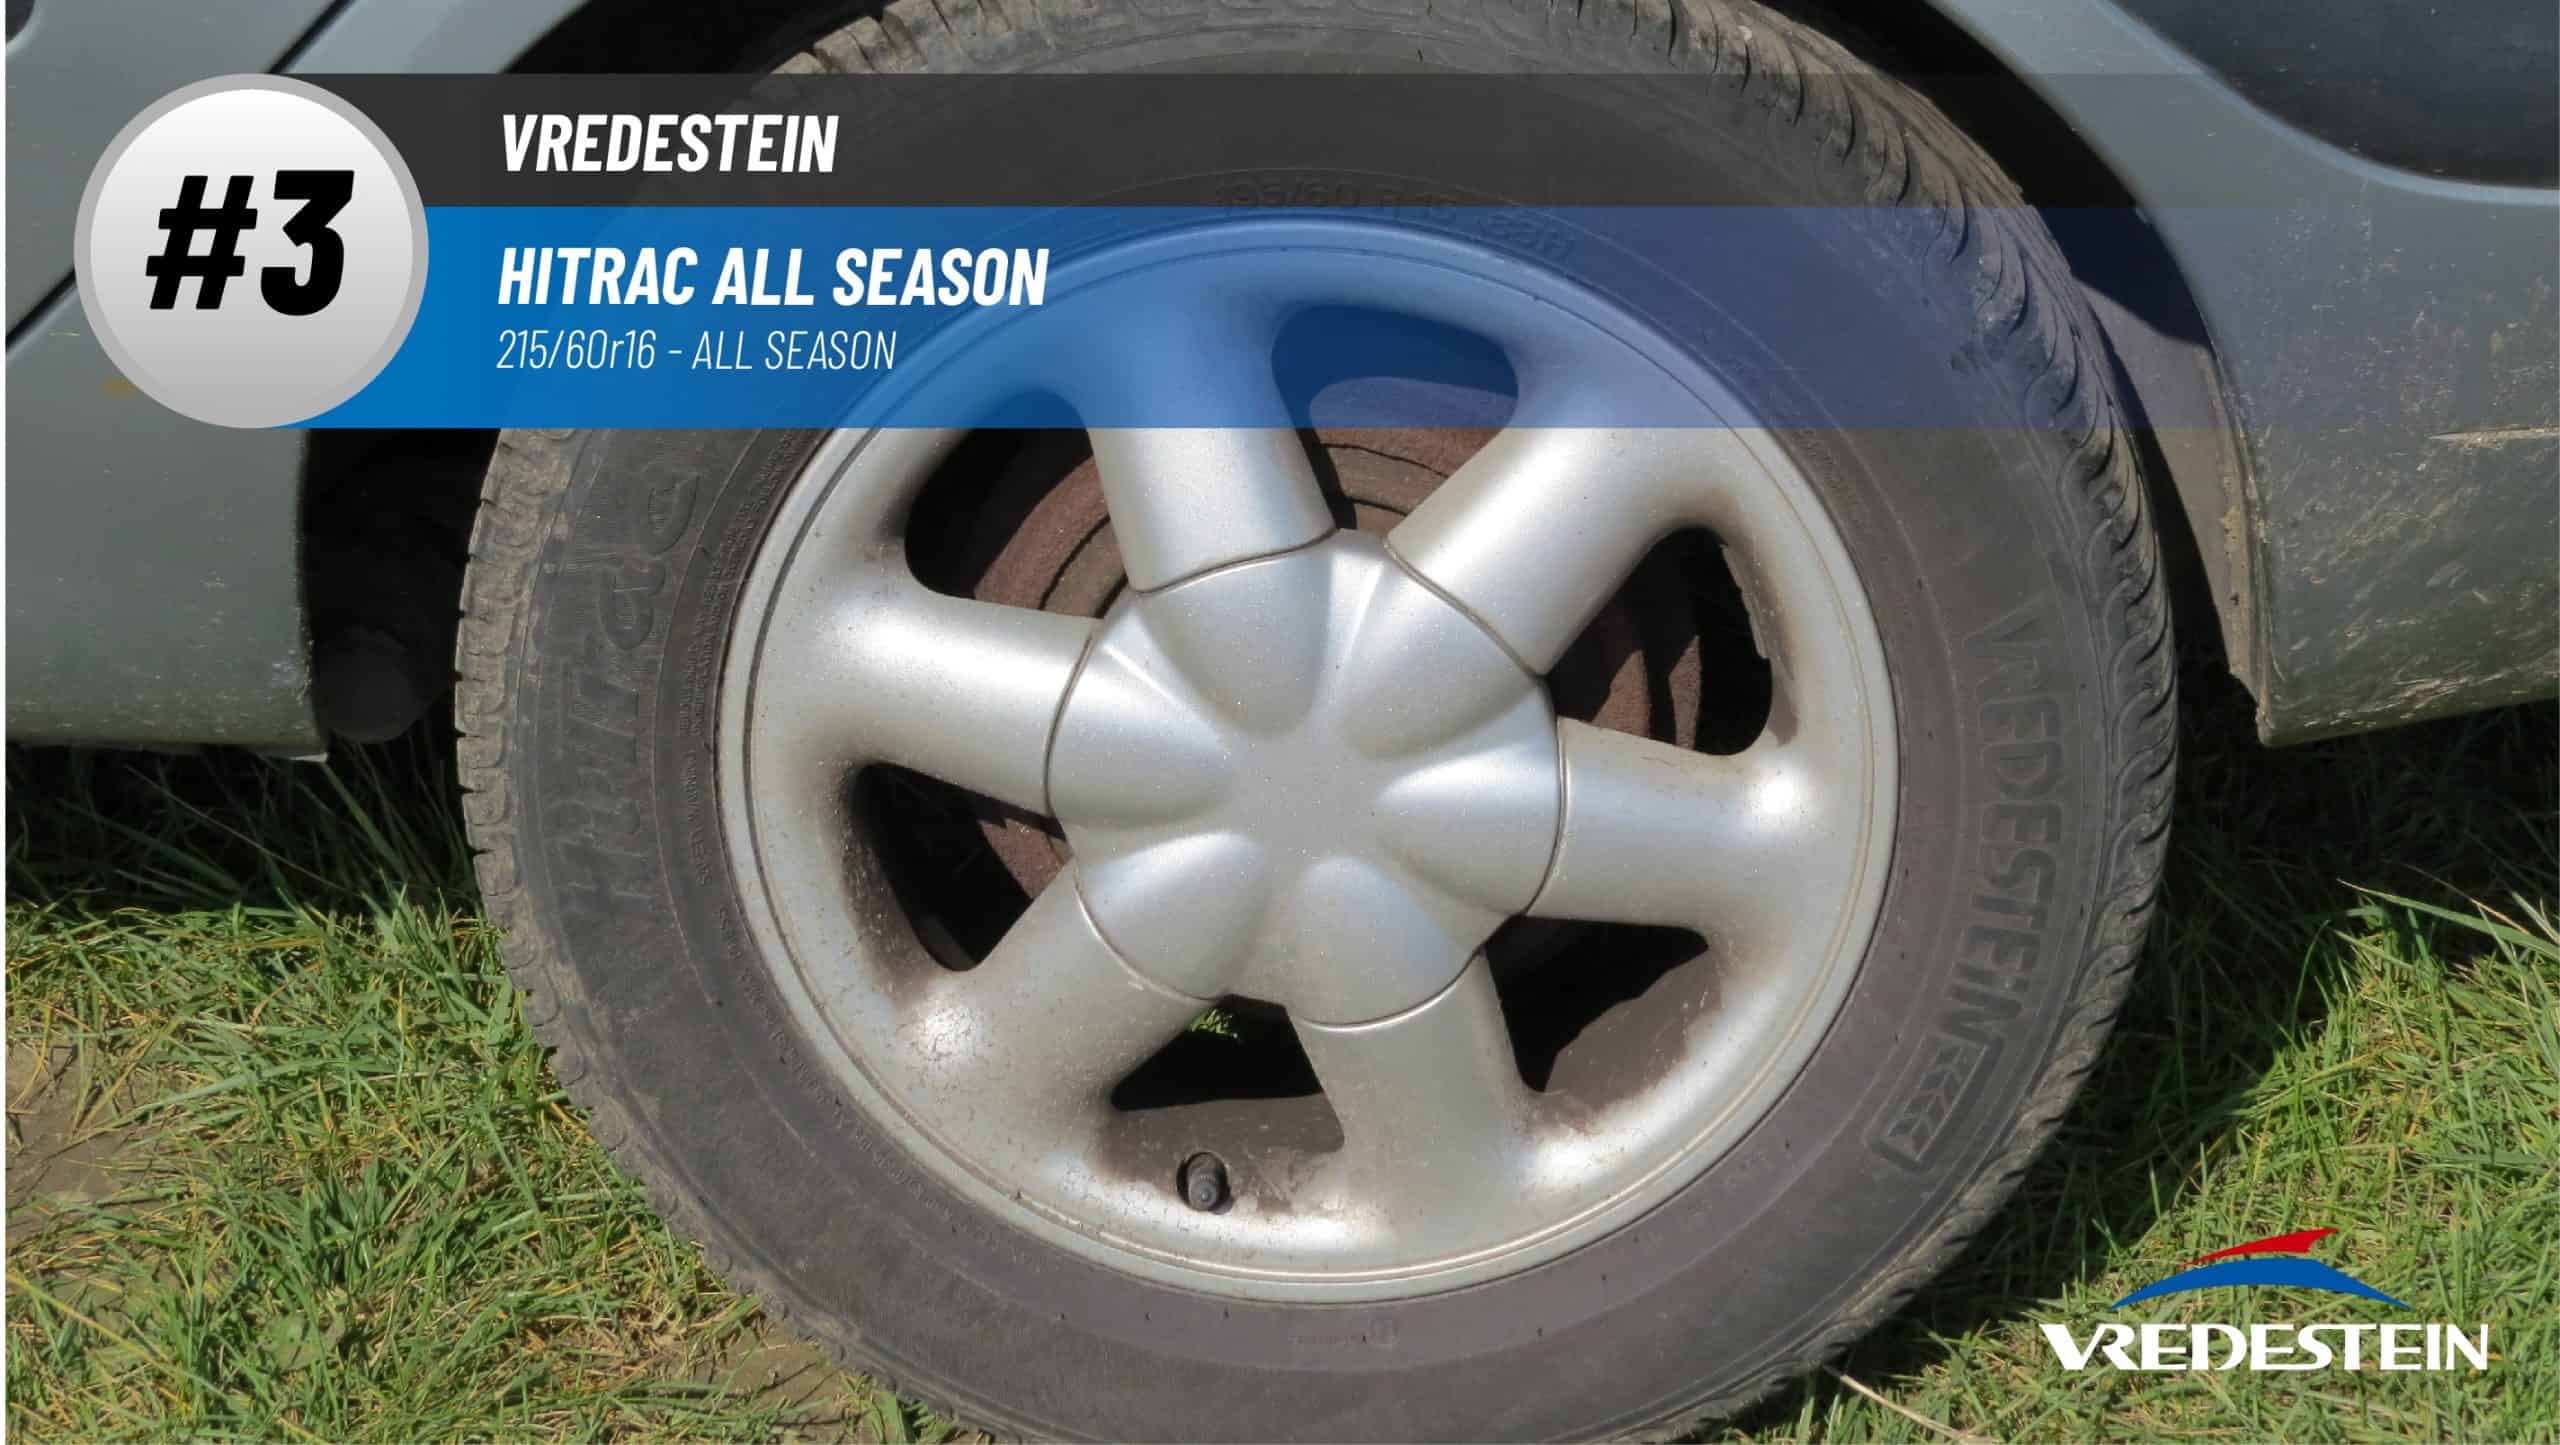 Top #3 All Season Tires: Vredestein Hitrac All Season – 215/60r16